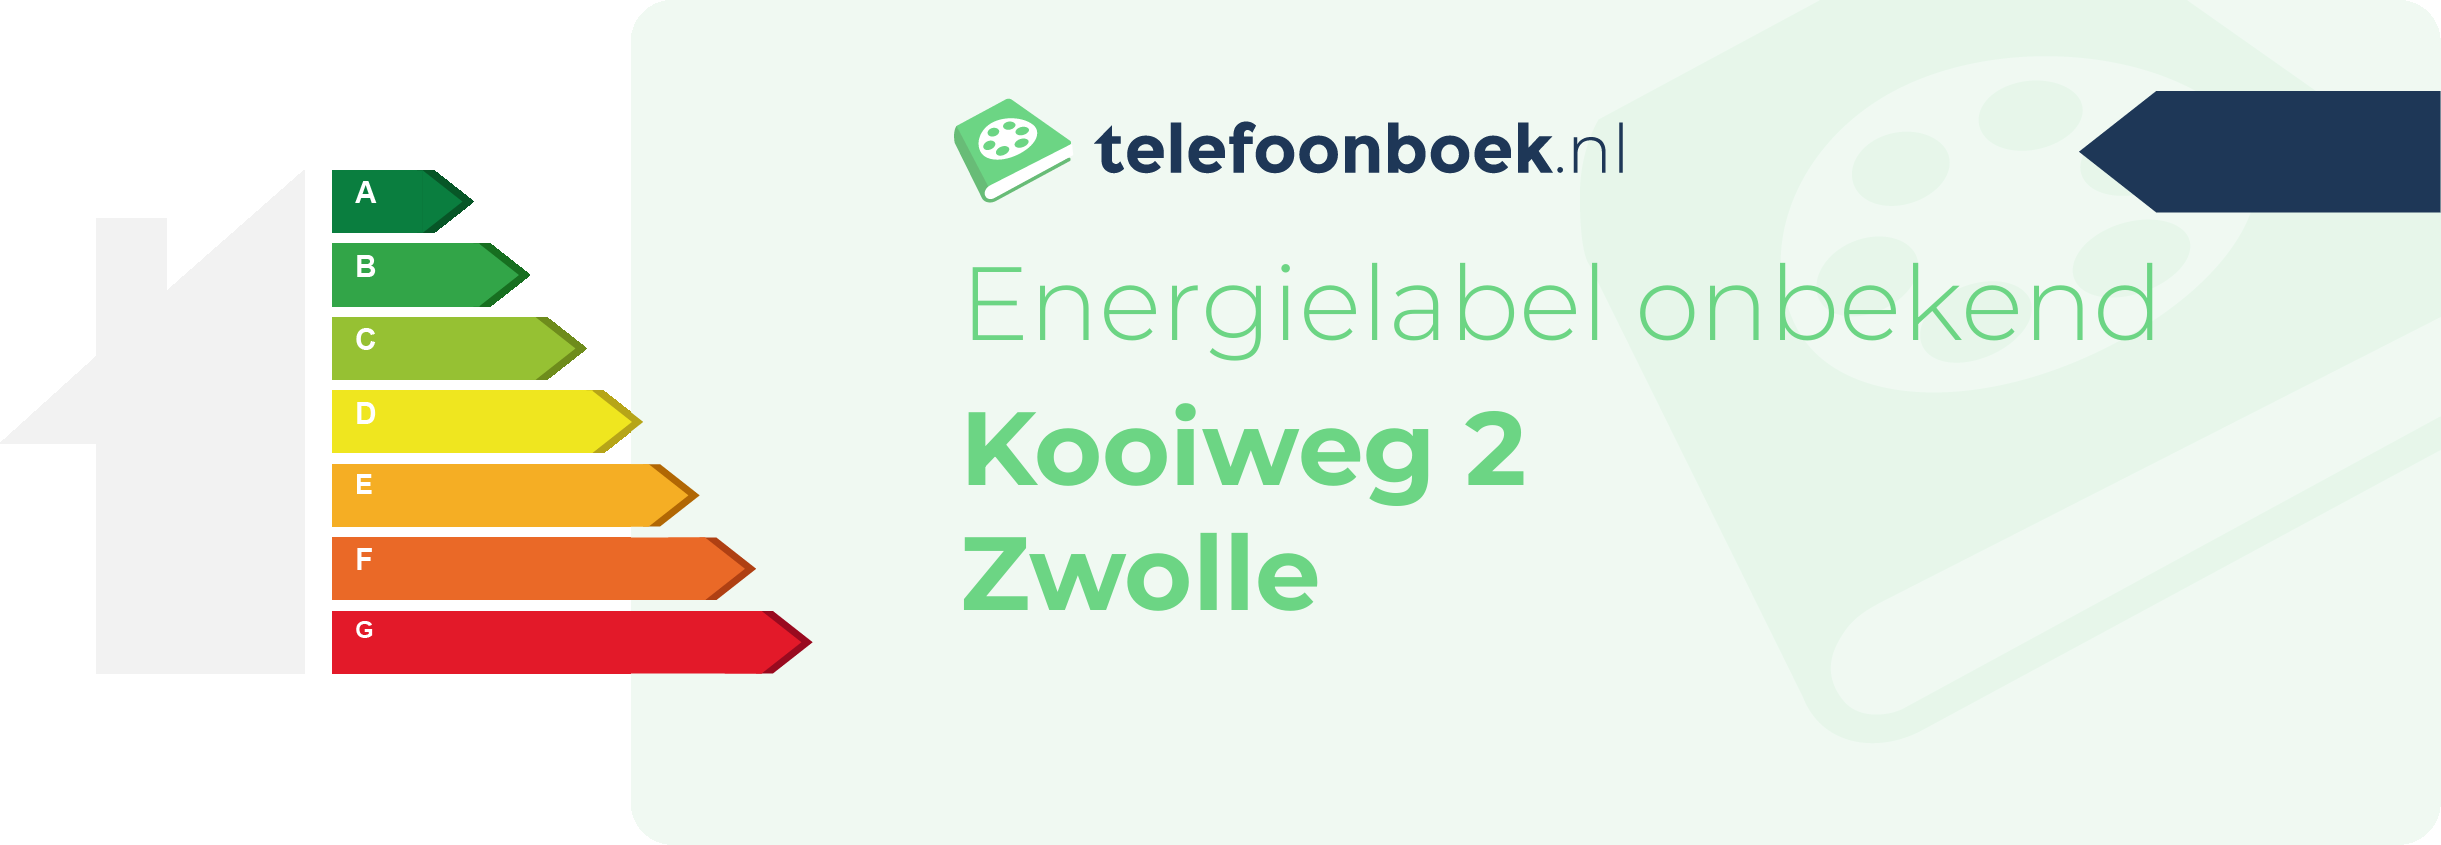 Energielabel Kooiweg 2 Zwolle